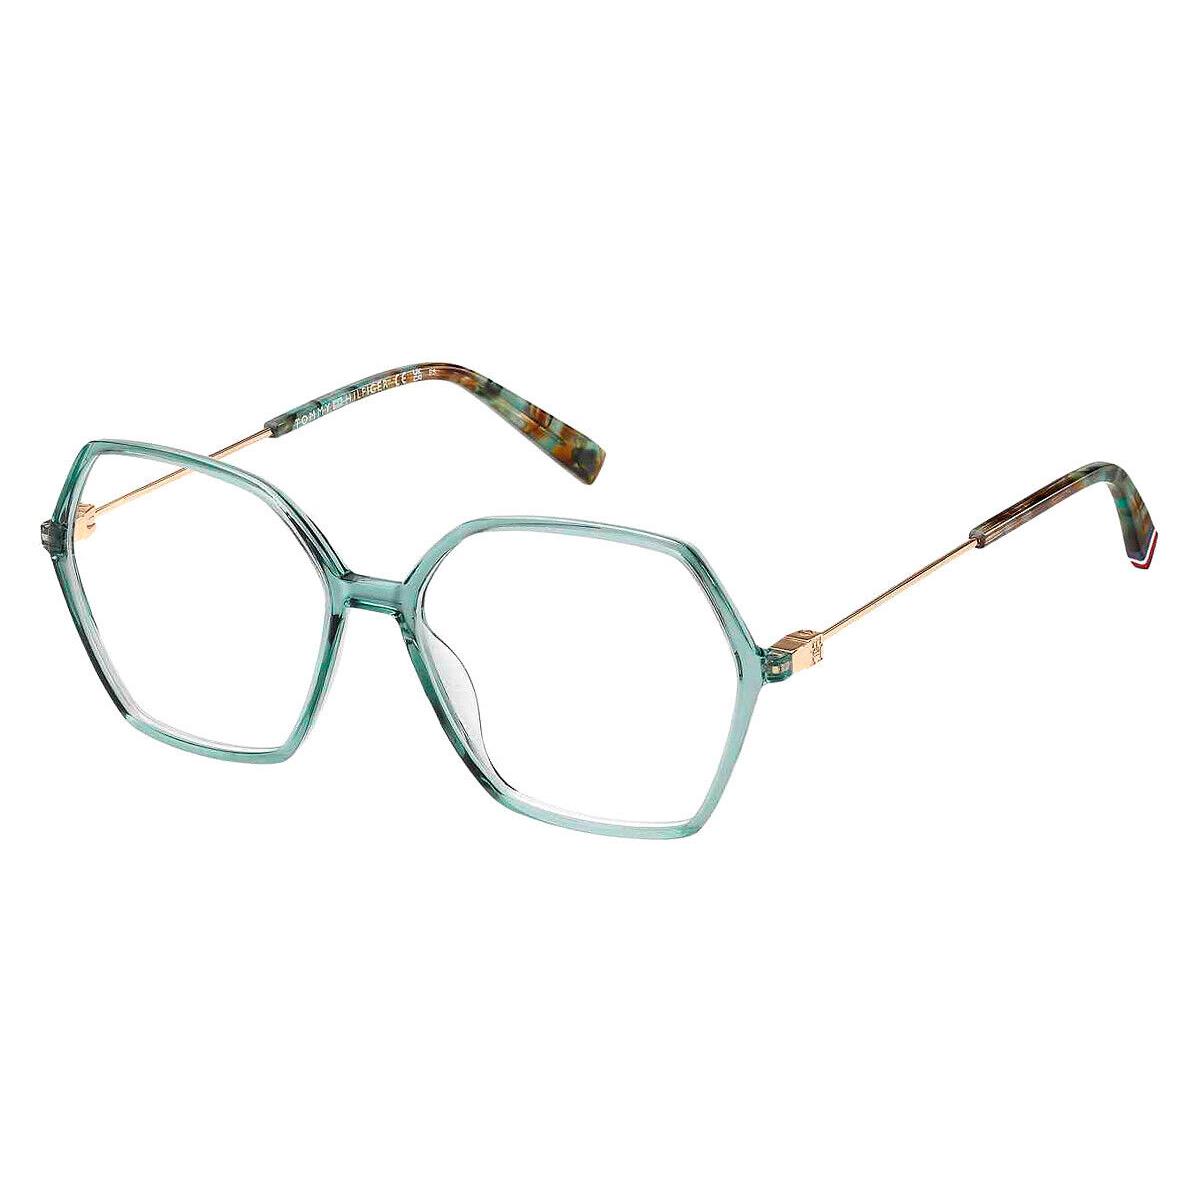 Tommy Hilfiger Thf Eyeglasses Women Green 55mm - Frame: Green, Lens: Demo